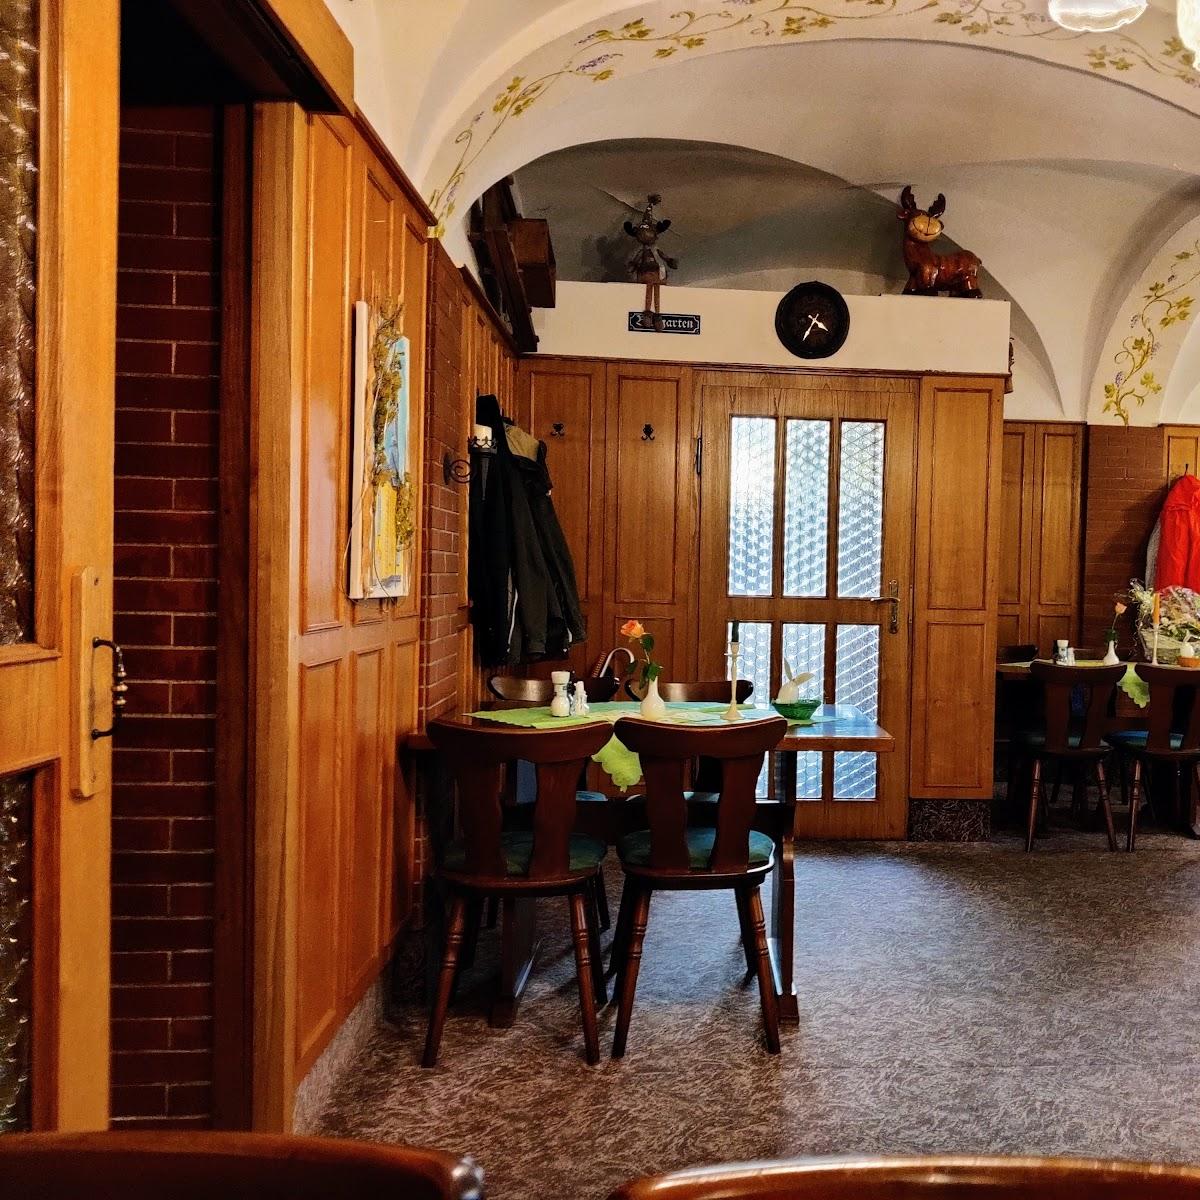 Restaurant "Ratskeller" in Zeulenroda-Triebes